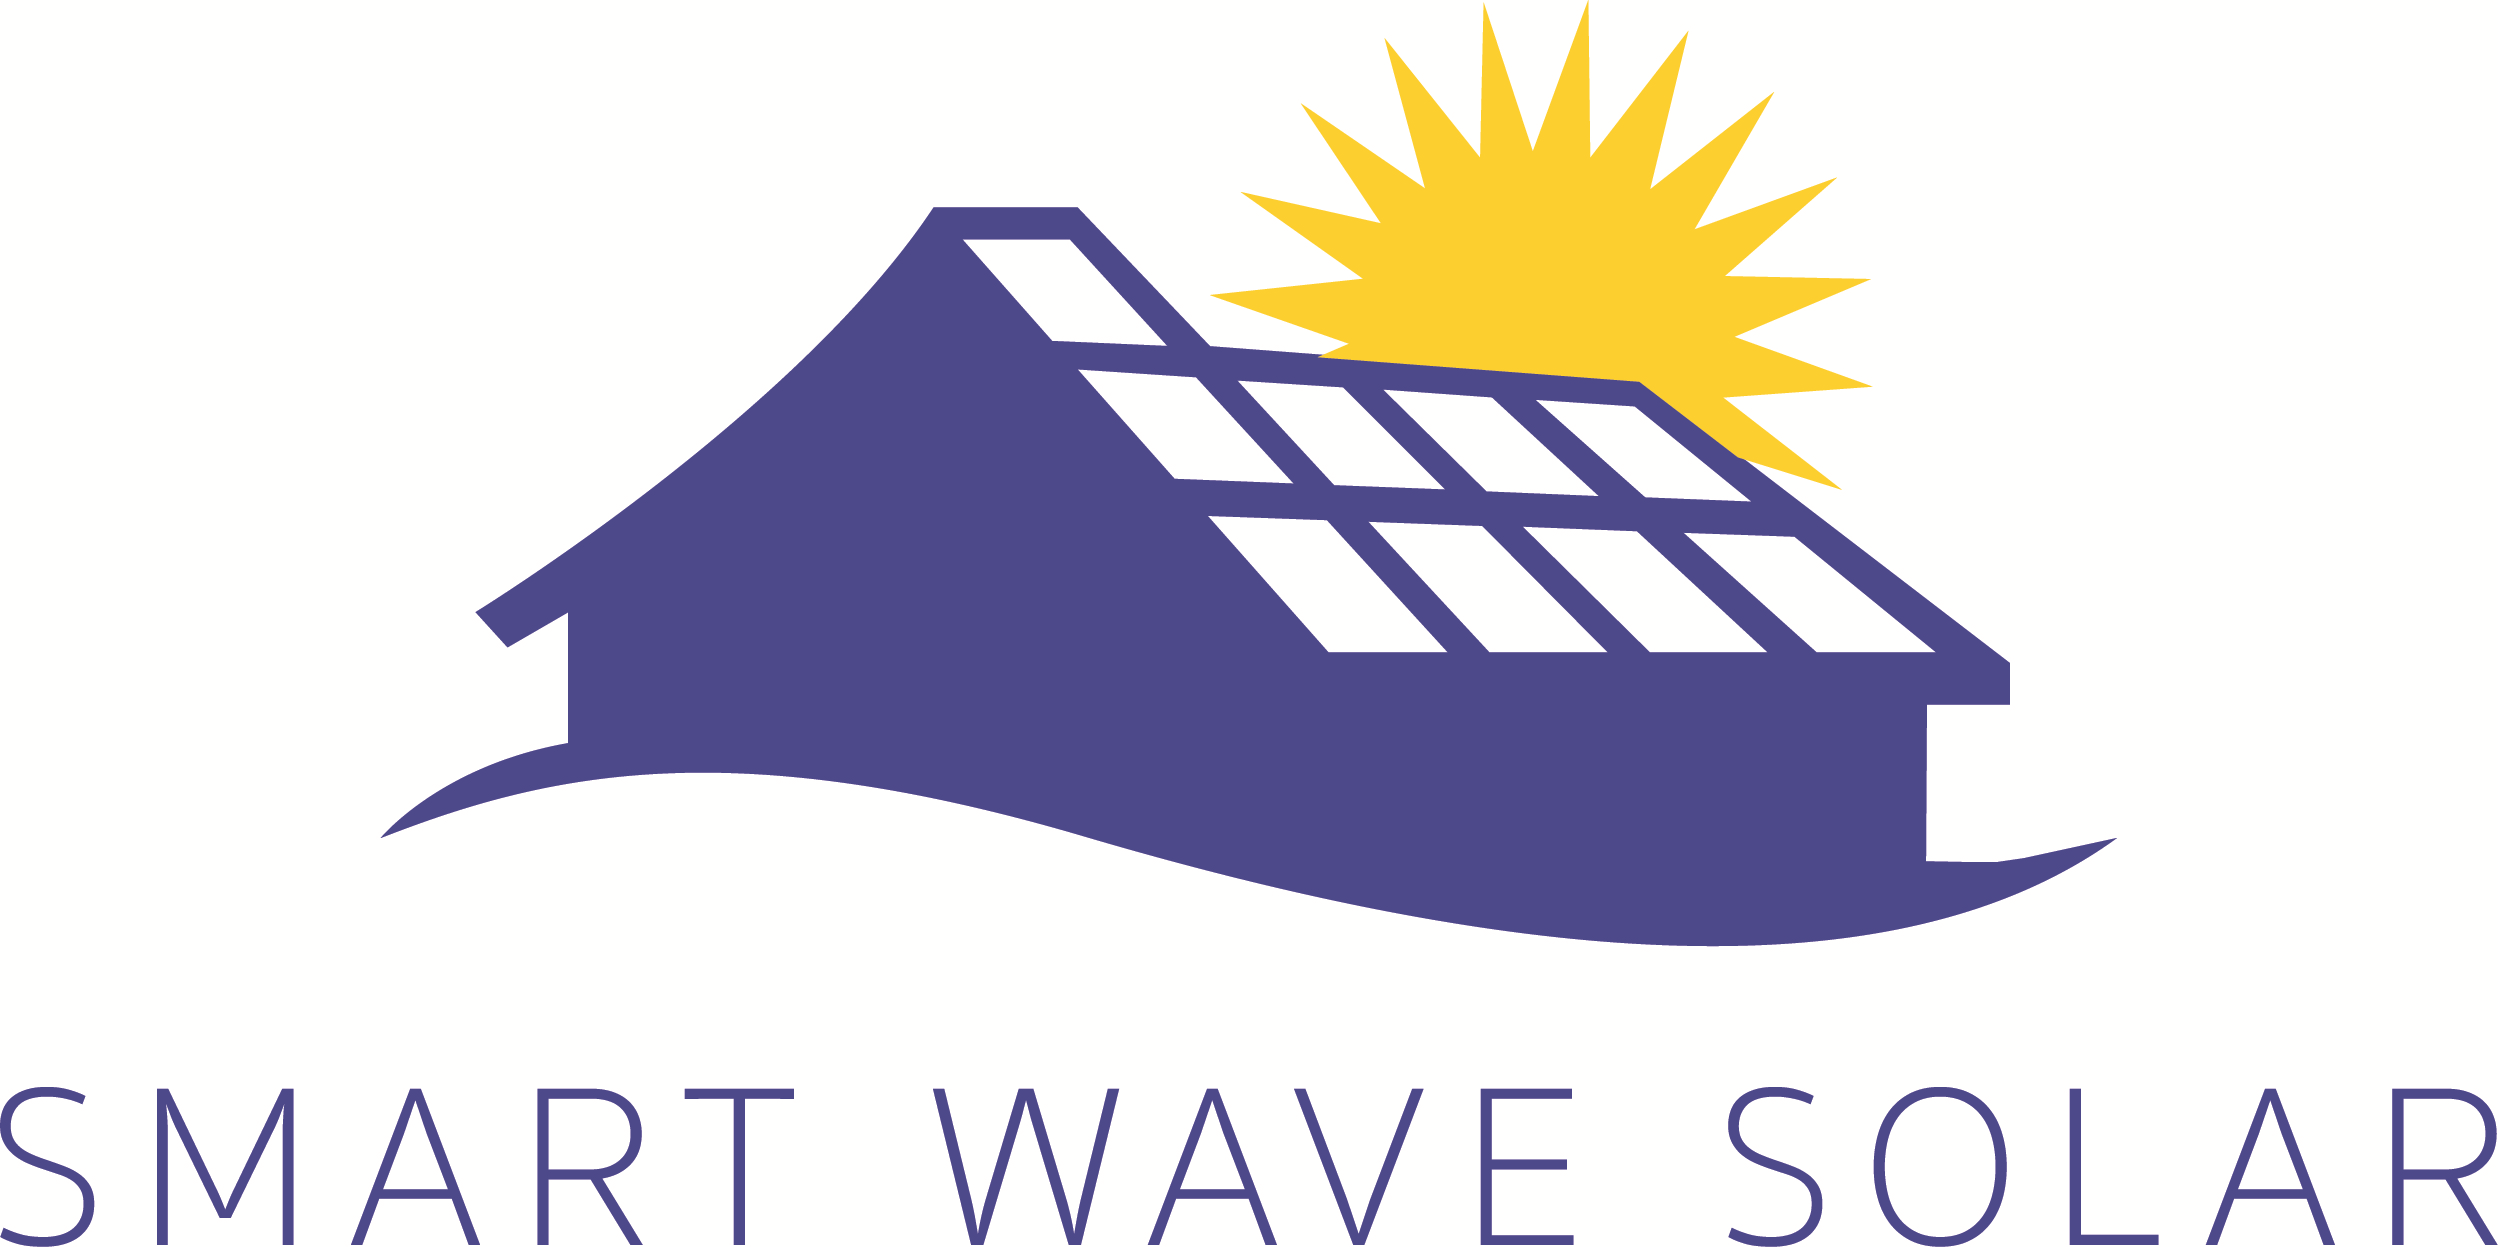 Smart Wave Solar